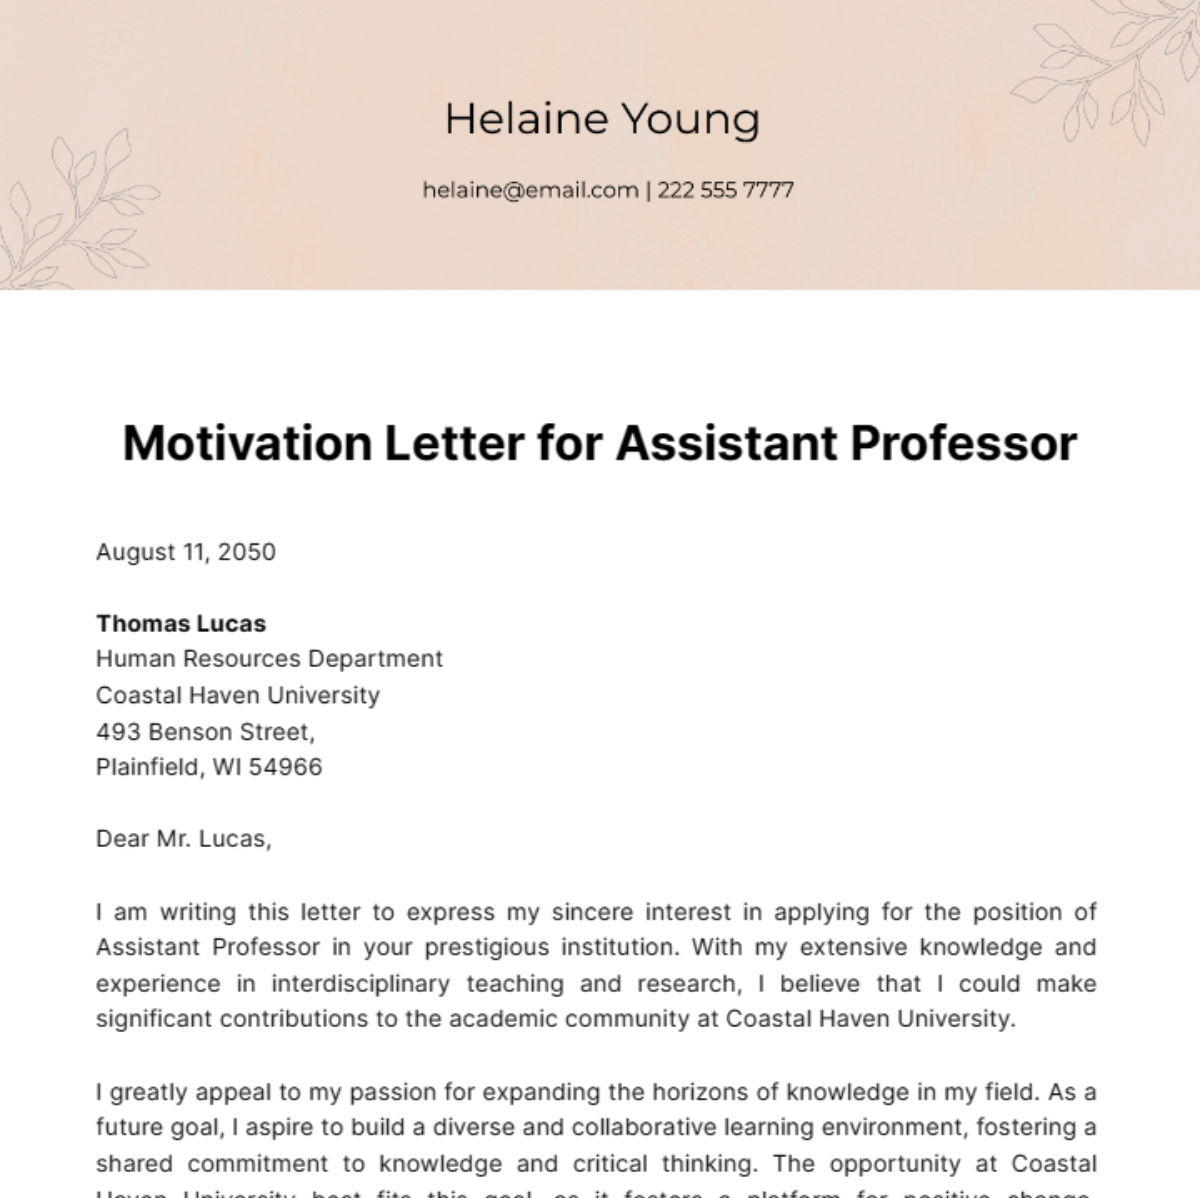 Motivation Letter for Assistant Professor Template